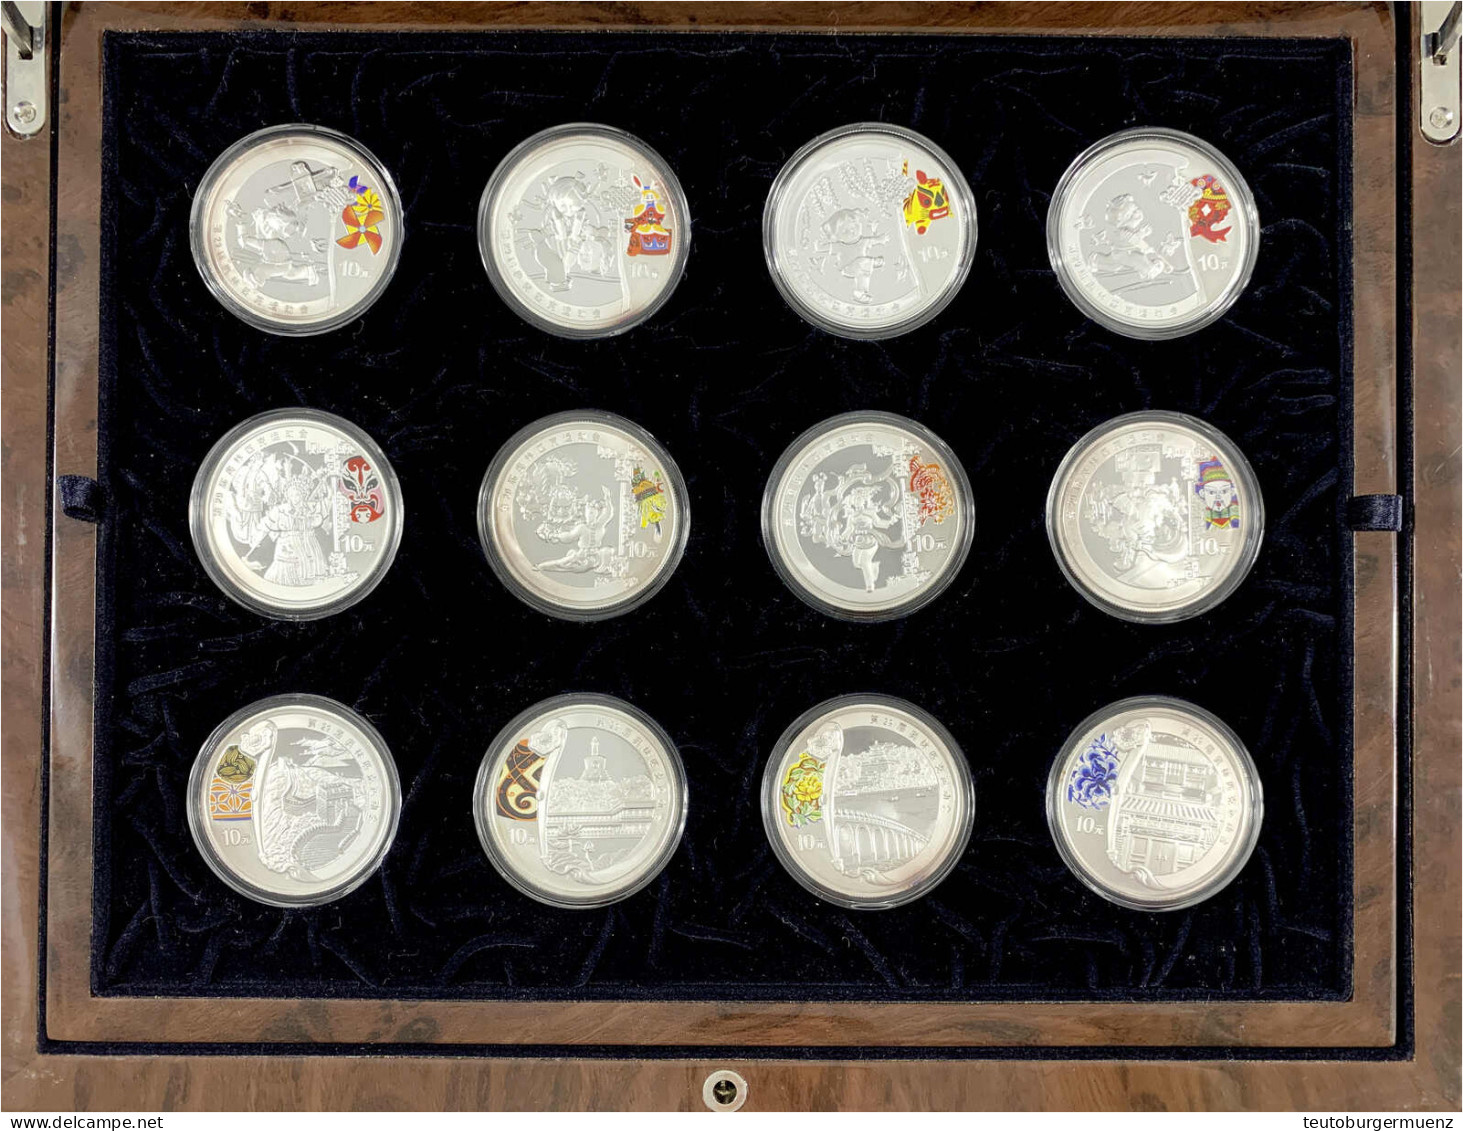 12 Verschiedene 10 Yuan Farbsilbermünzen (je 1 Unze) 2008 Zur Olympiade In Peking. Kpl. Serie, In Dekorativer Schatulle  - China